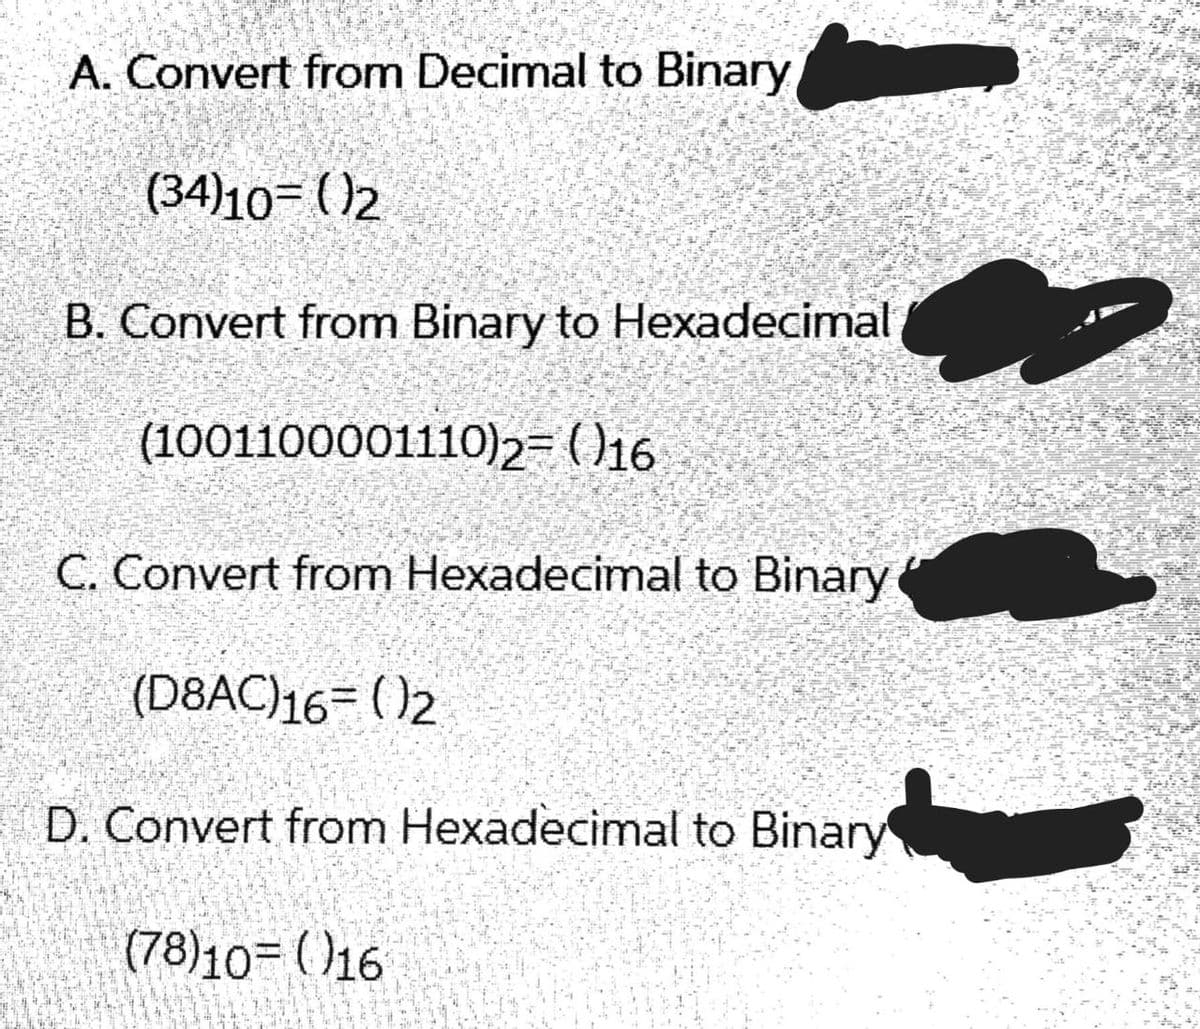 A. Convert from Decimal to Binary
(34)10= ()2
B. Convert from Binary to Hexadecimal
(1001100001110),2= ()16
C. Convert from Hexadecimal to Binary
(D8AC)16= ()2
D. Convert from Hexadecimal to Binary
(78)10= ()16
